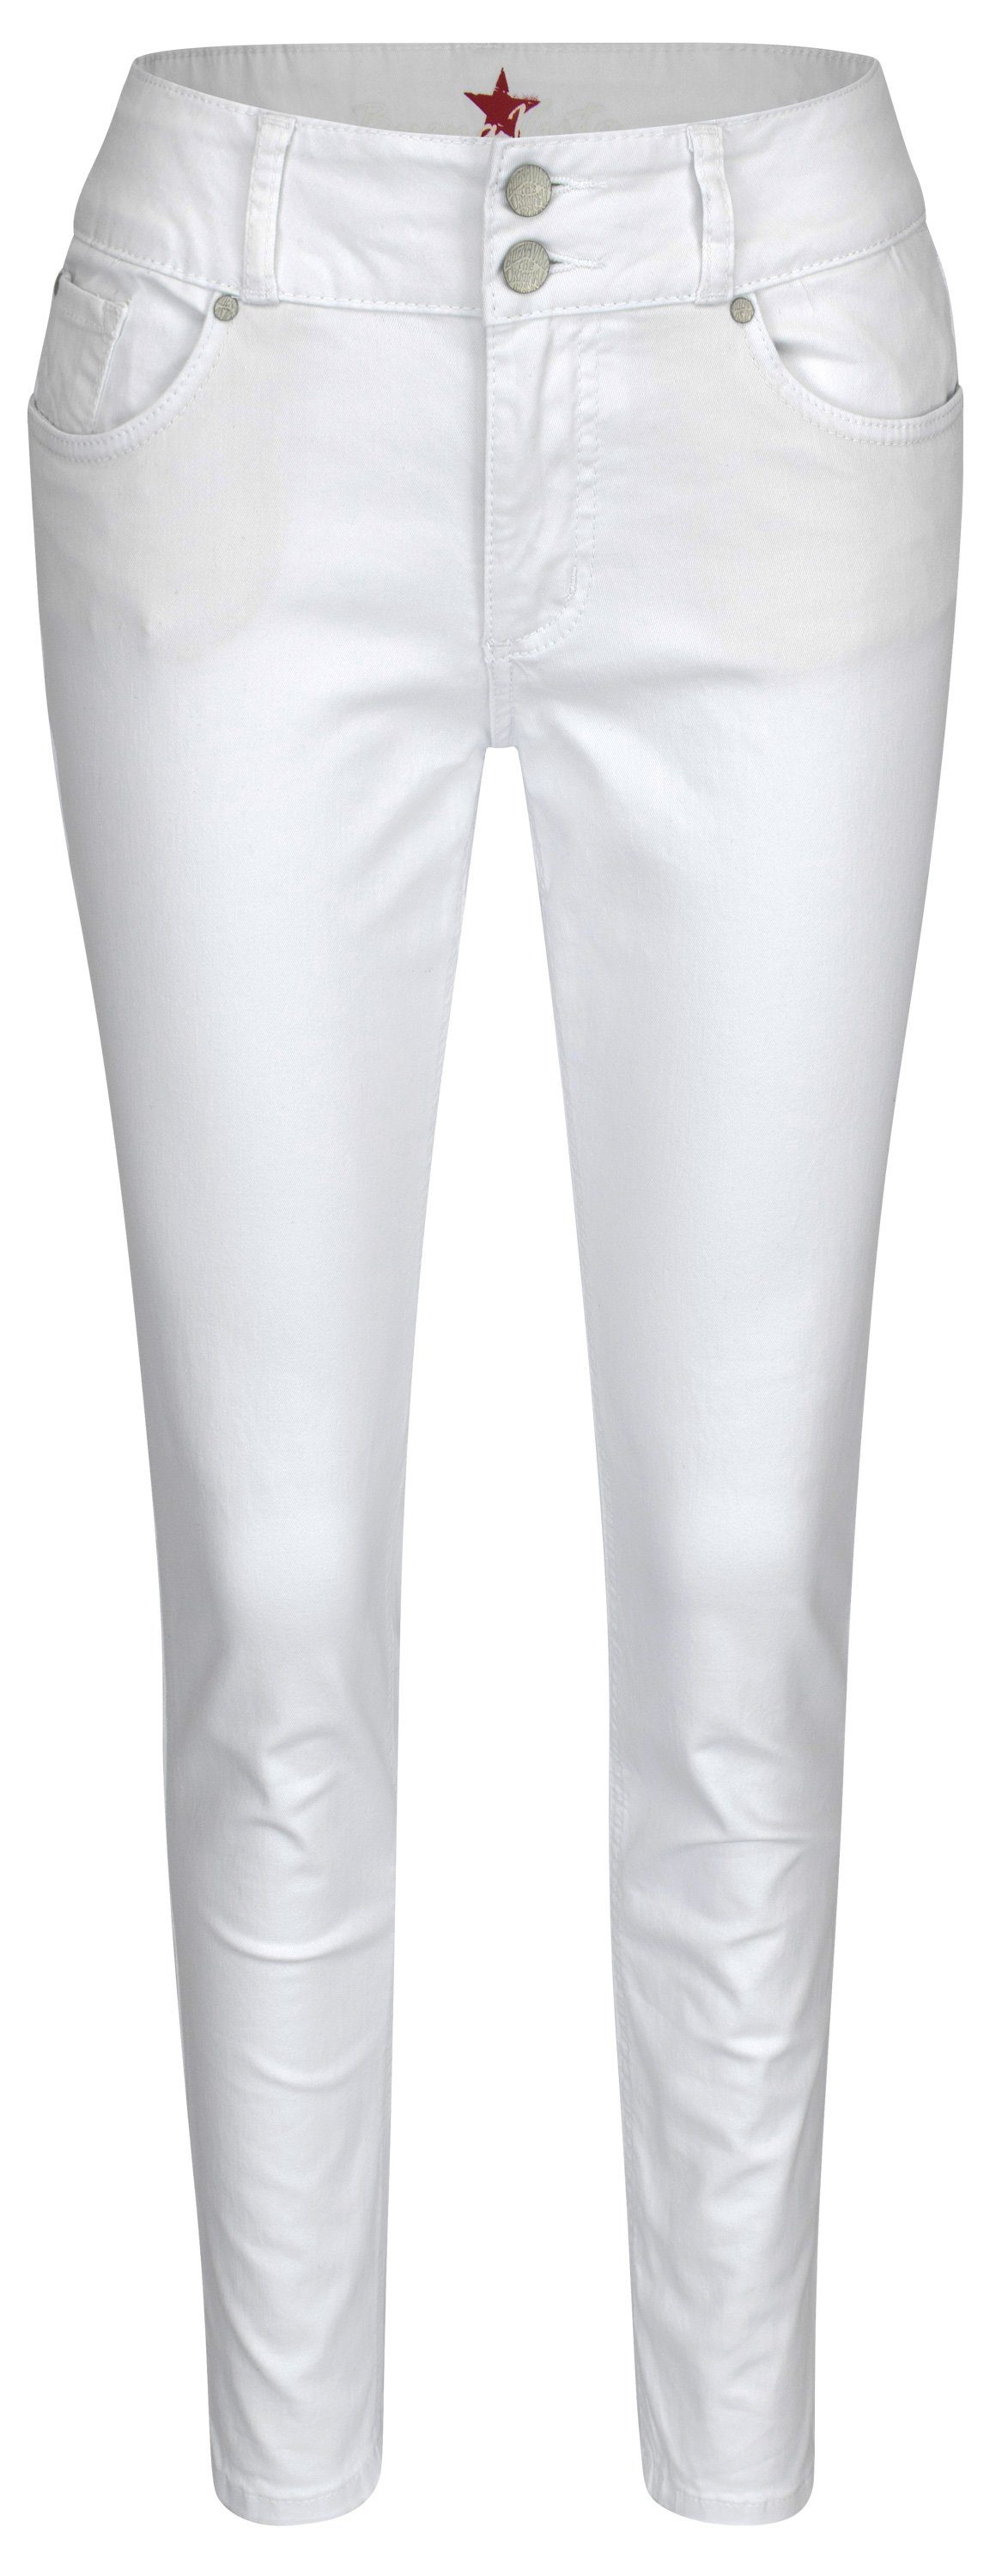 Buena Vista Stretch-Jeans BUENA VISTA TUMMYLESS white 888 B5664 502.032 - Stretch Twill